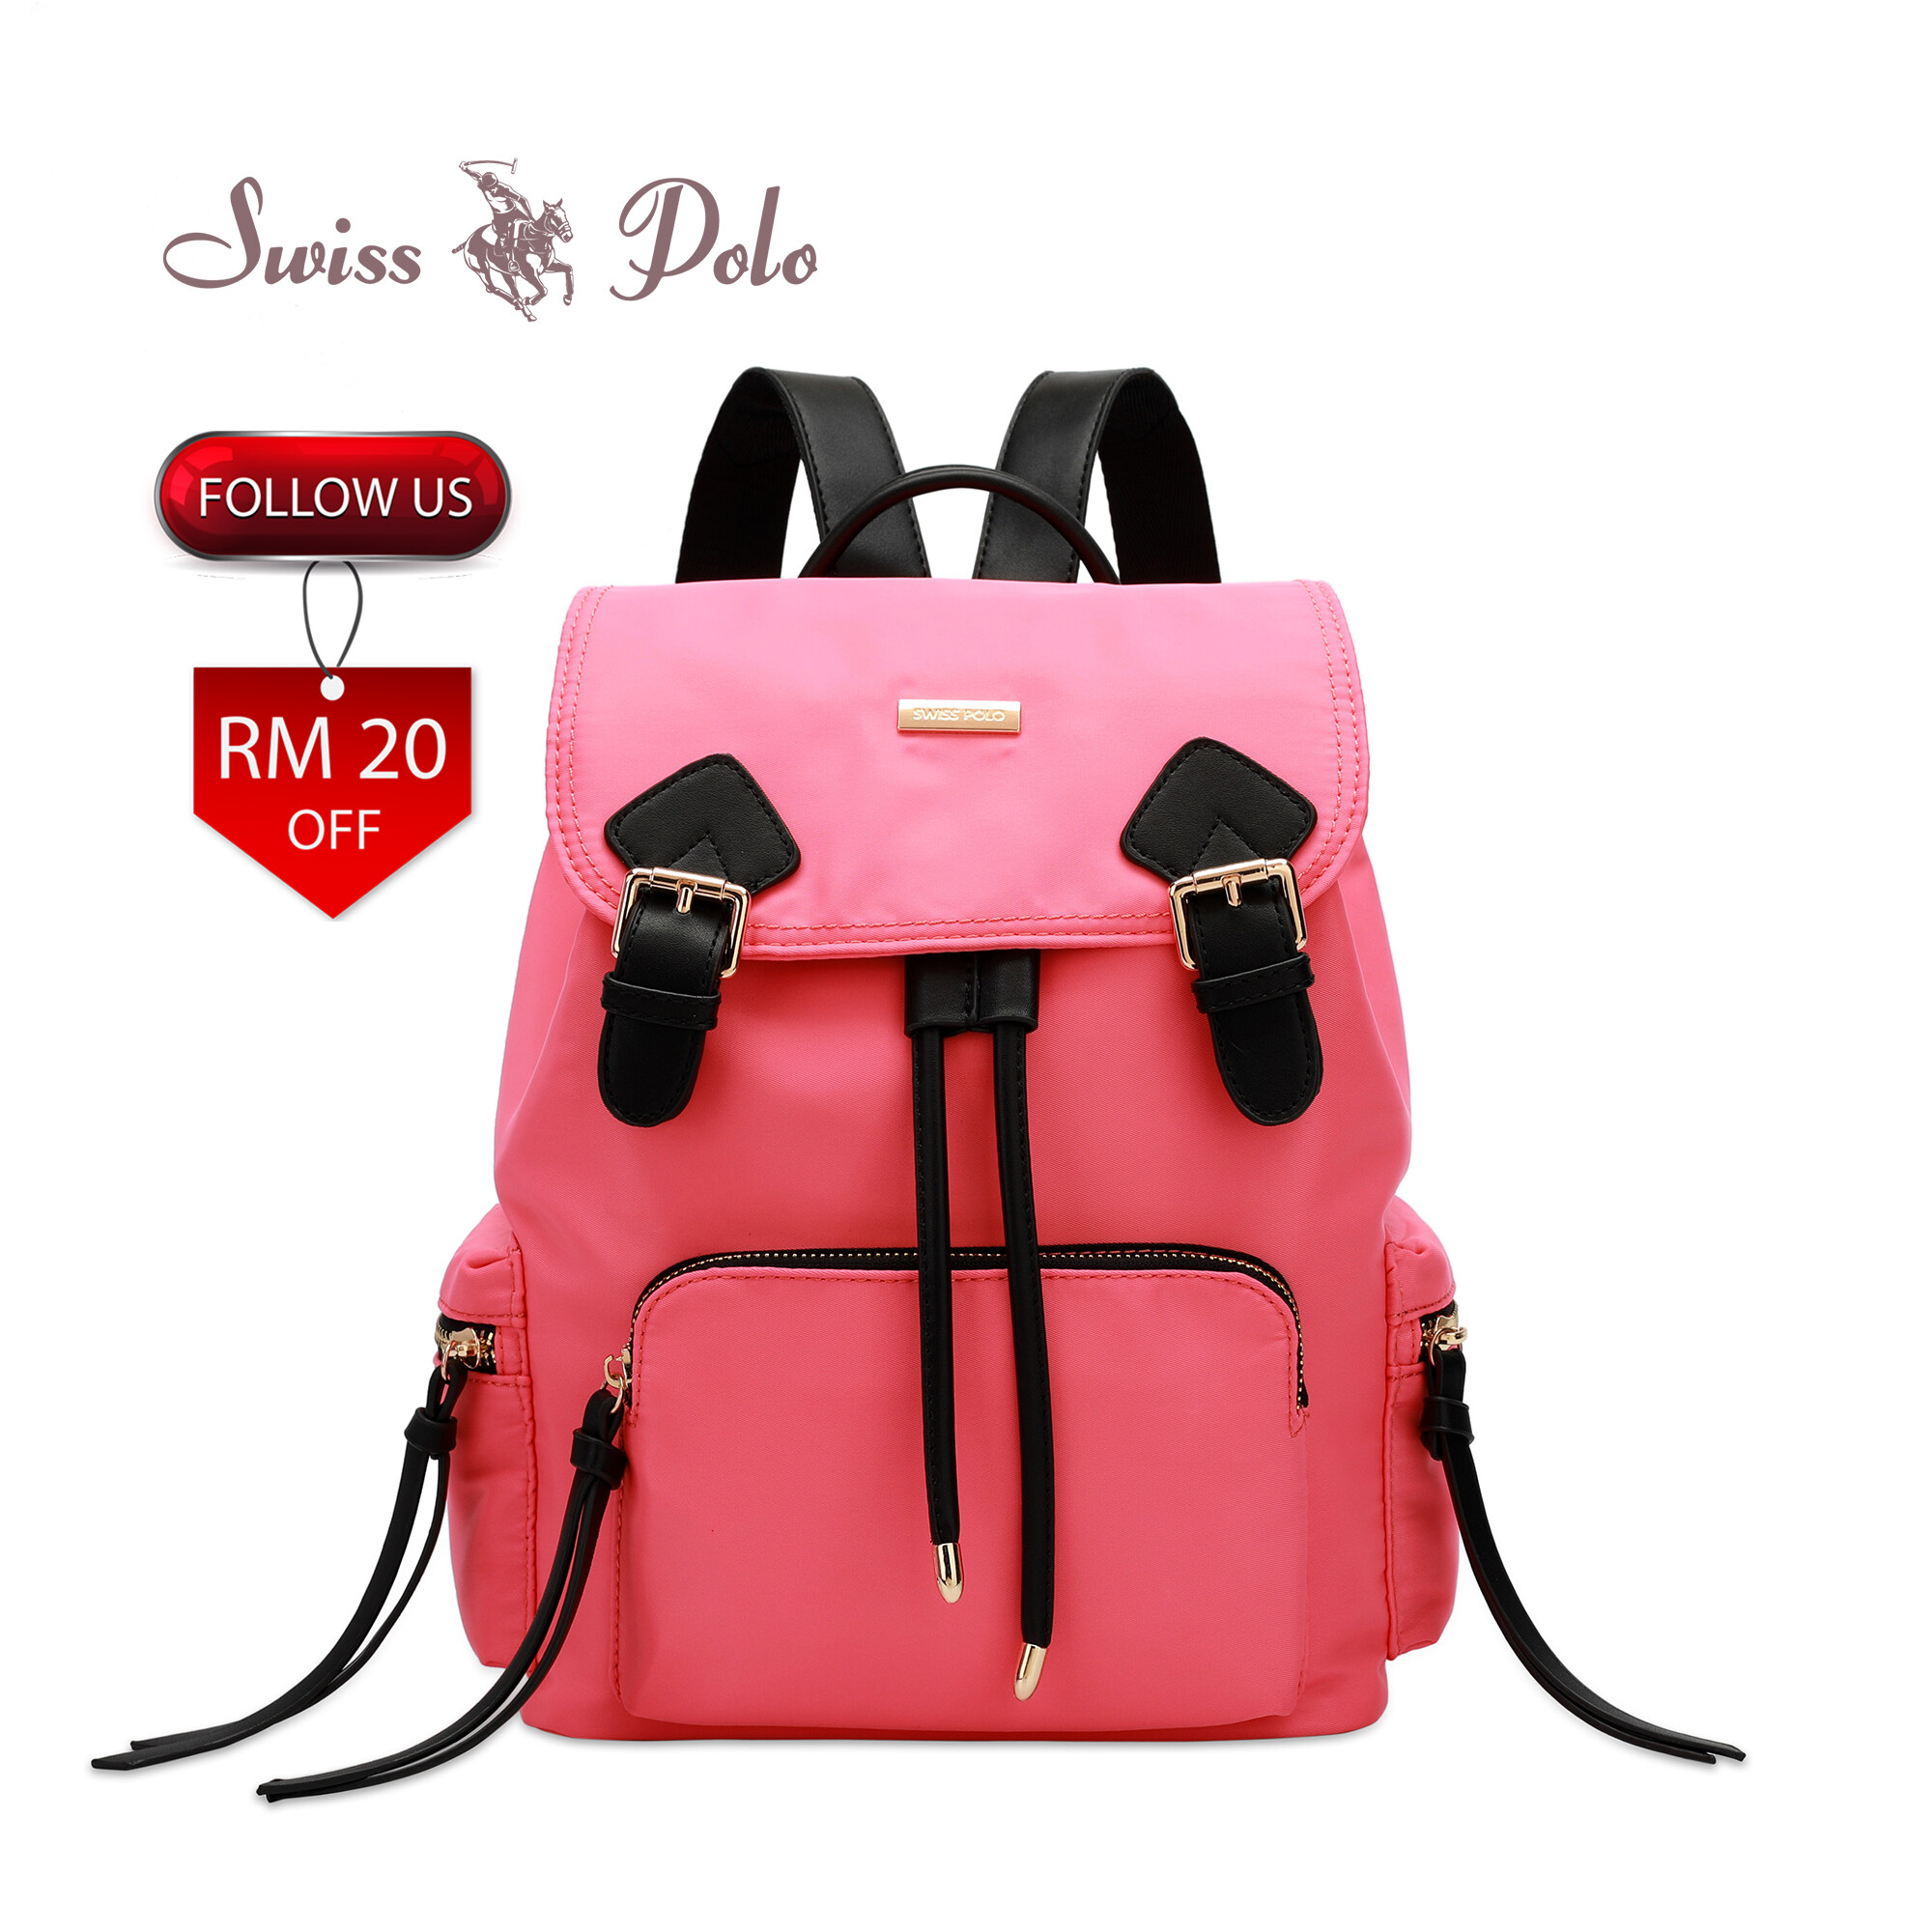 SWISS POLO Ladies Backpack HEK 7575-3 PINK